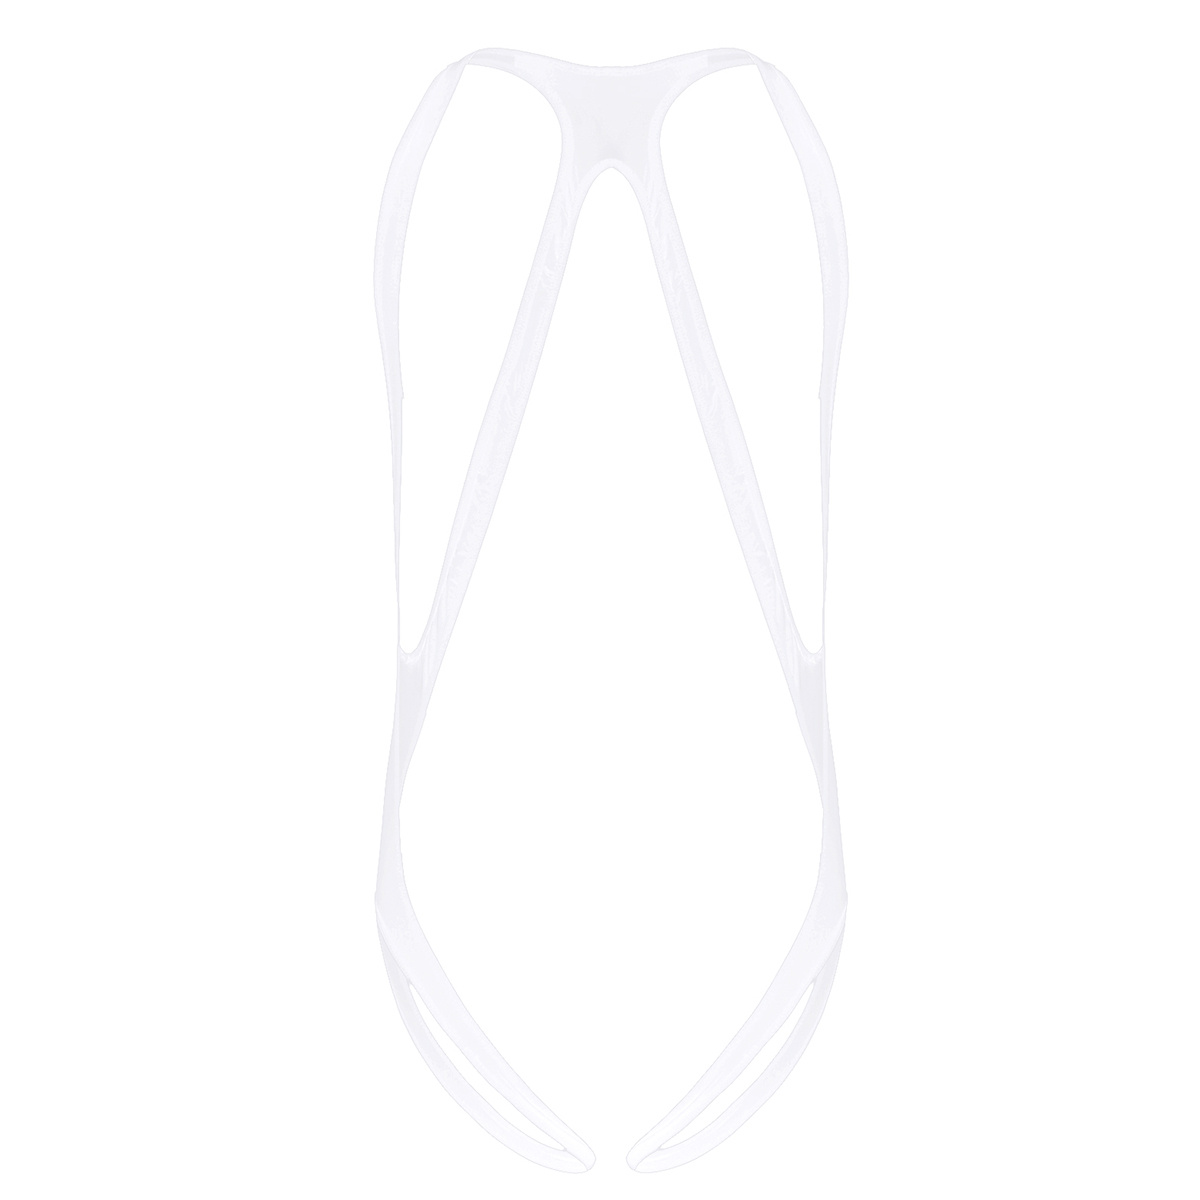 Mens One-piece Lingerie Body Chest harness Halter Neck Elastic Wide Straps Mankini Jockstrap Underwear Leotard Bodysuit